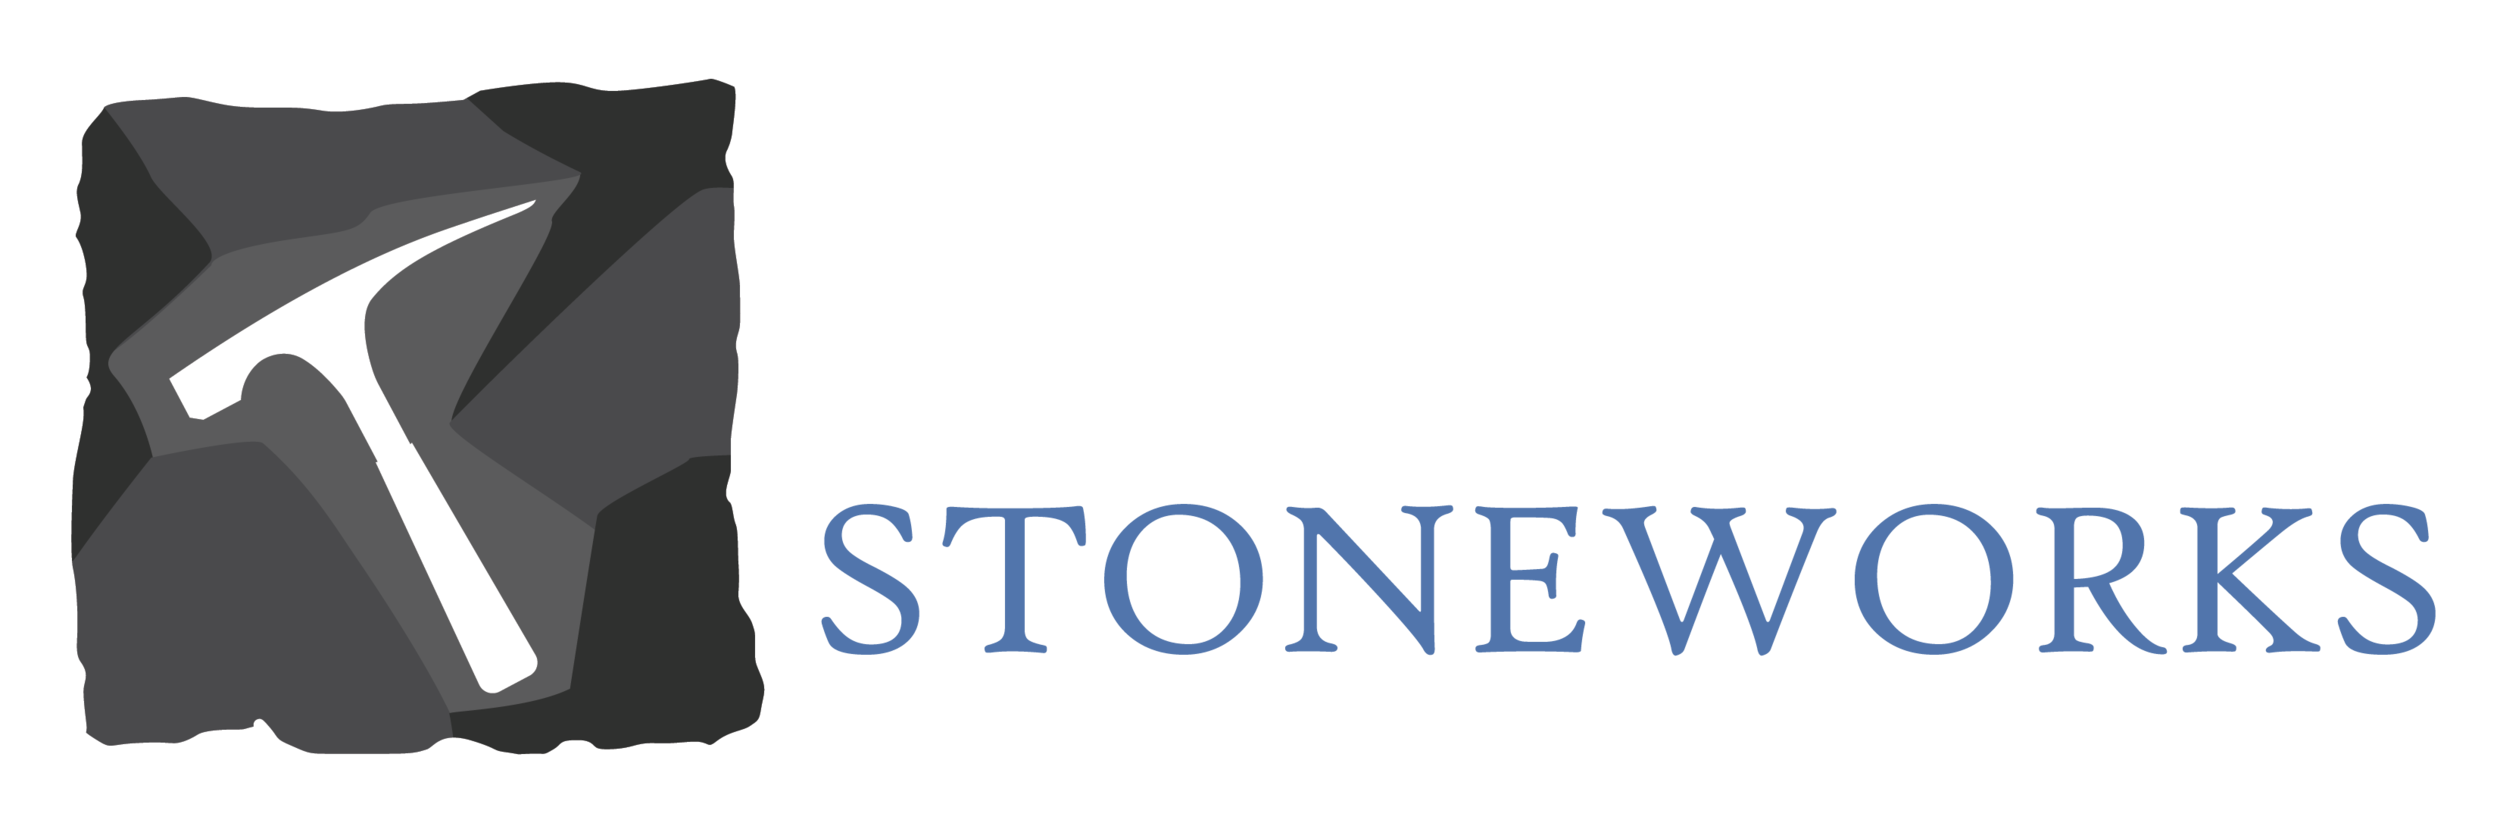 King Stoneworks